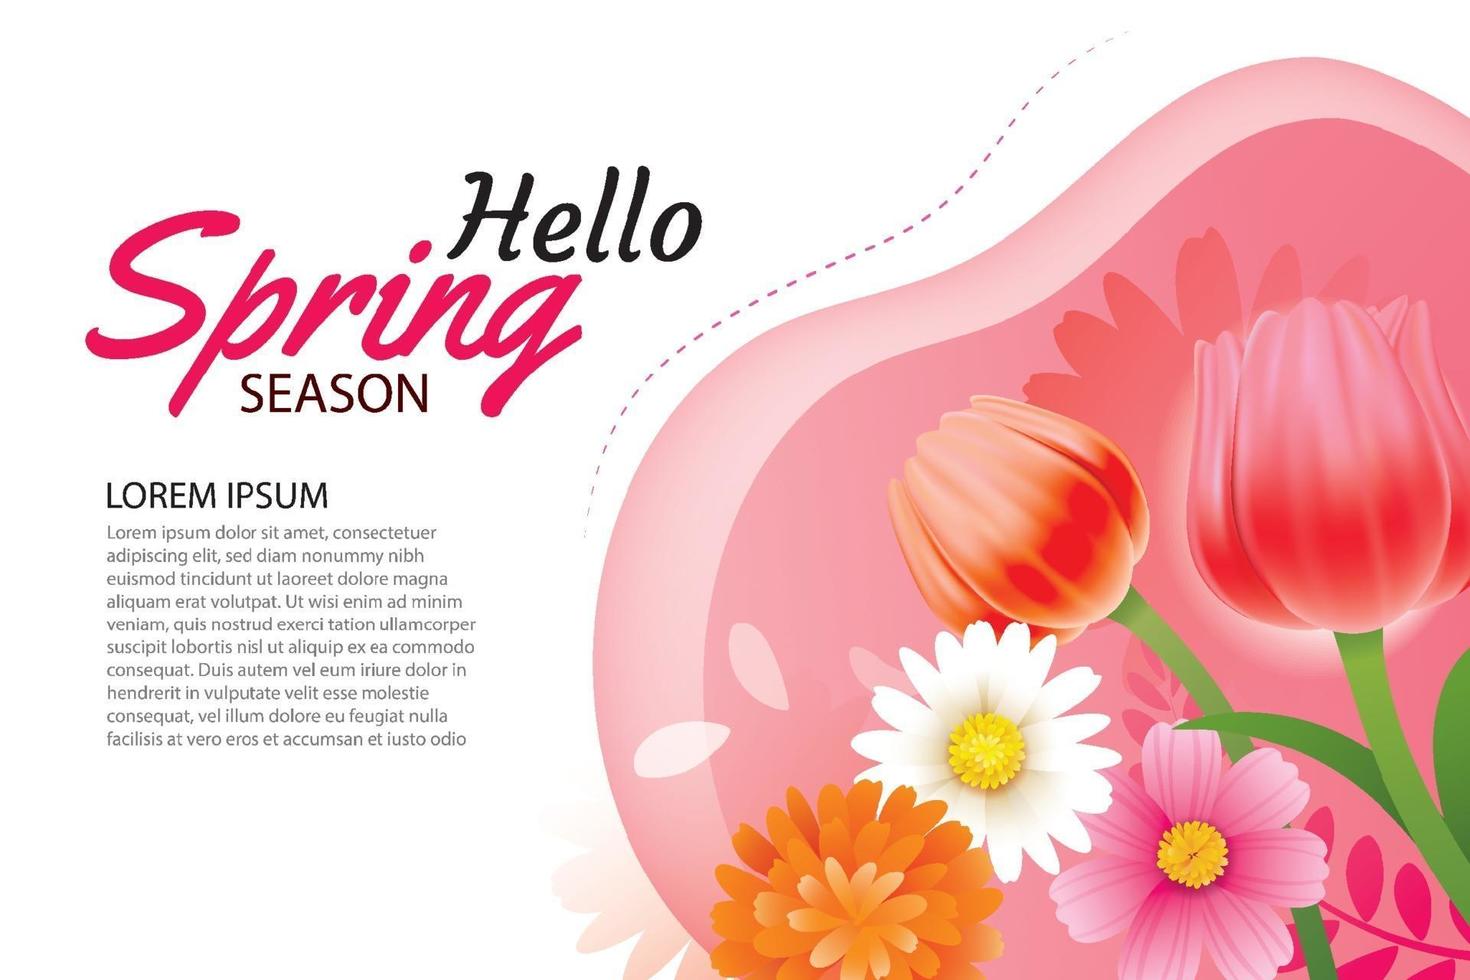 Hola tarjeta de felicitación de primavera e invitación con plantilla de fondo de flores florecientes. diseño para decoración, volantes, carteles, folletos, pancartas. vector